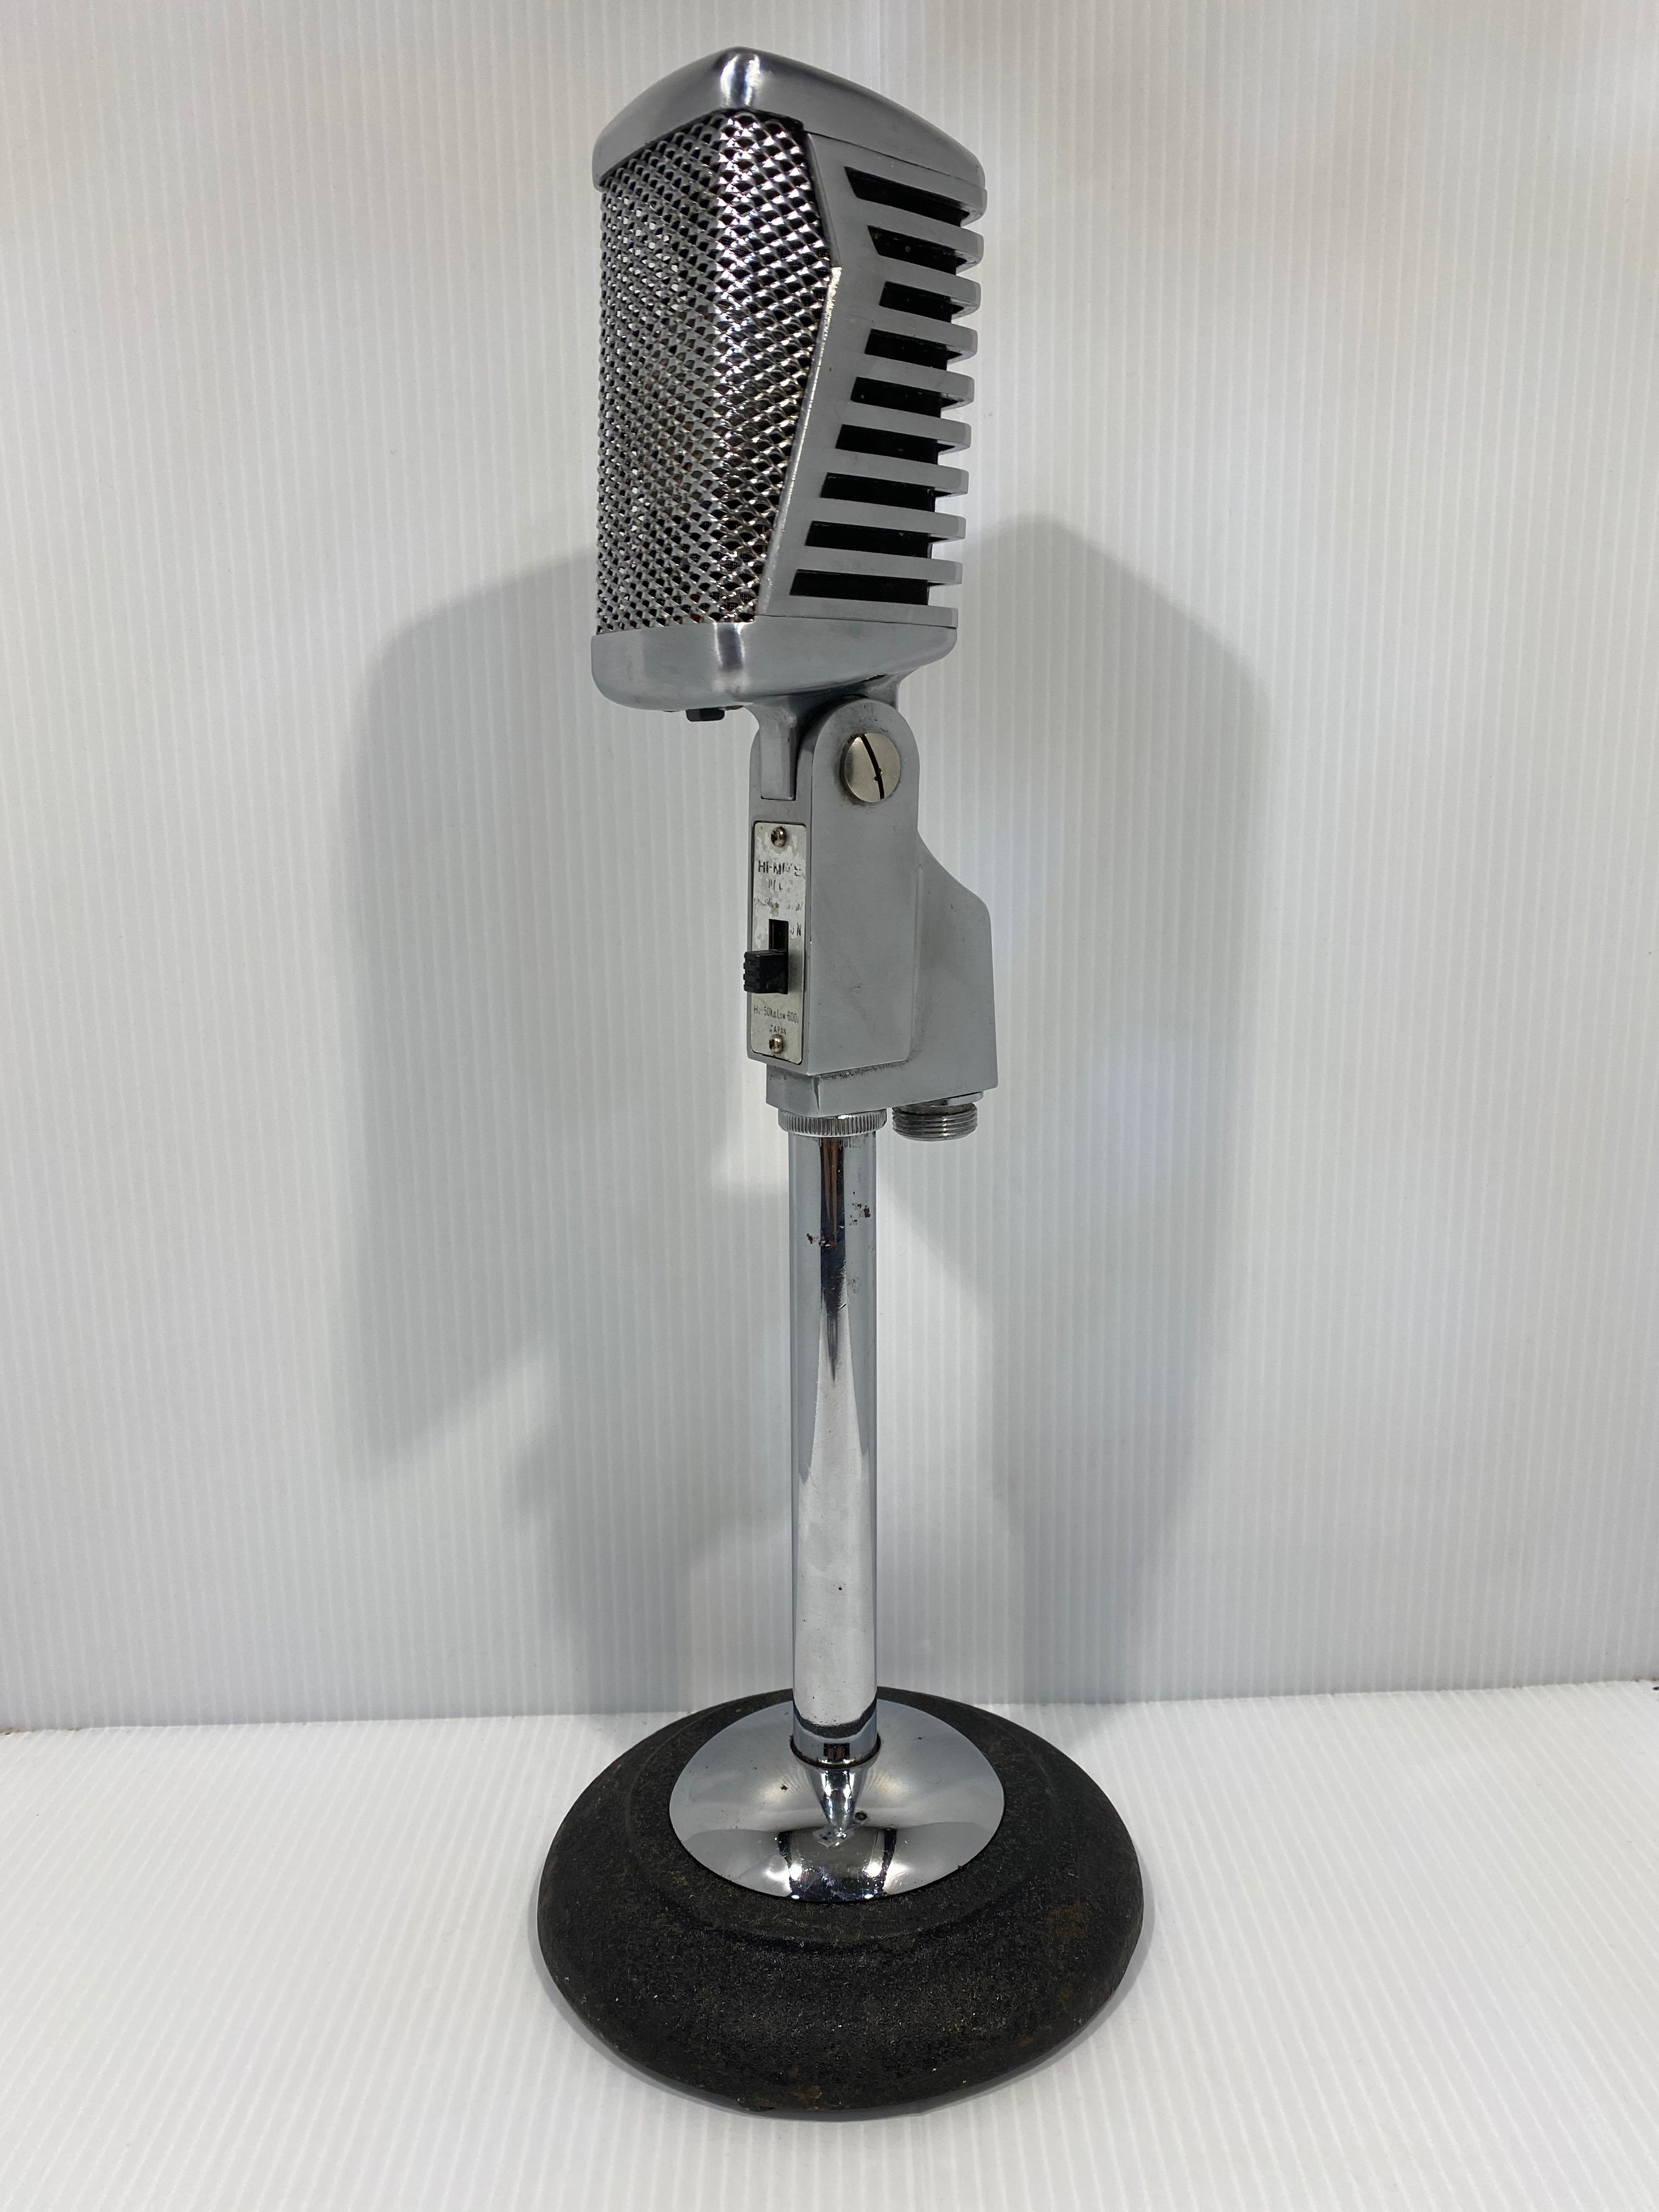 Vintage 1950s Teisco TM-4 dynamic microphone